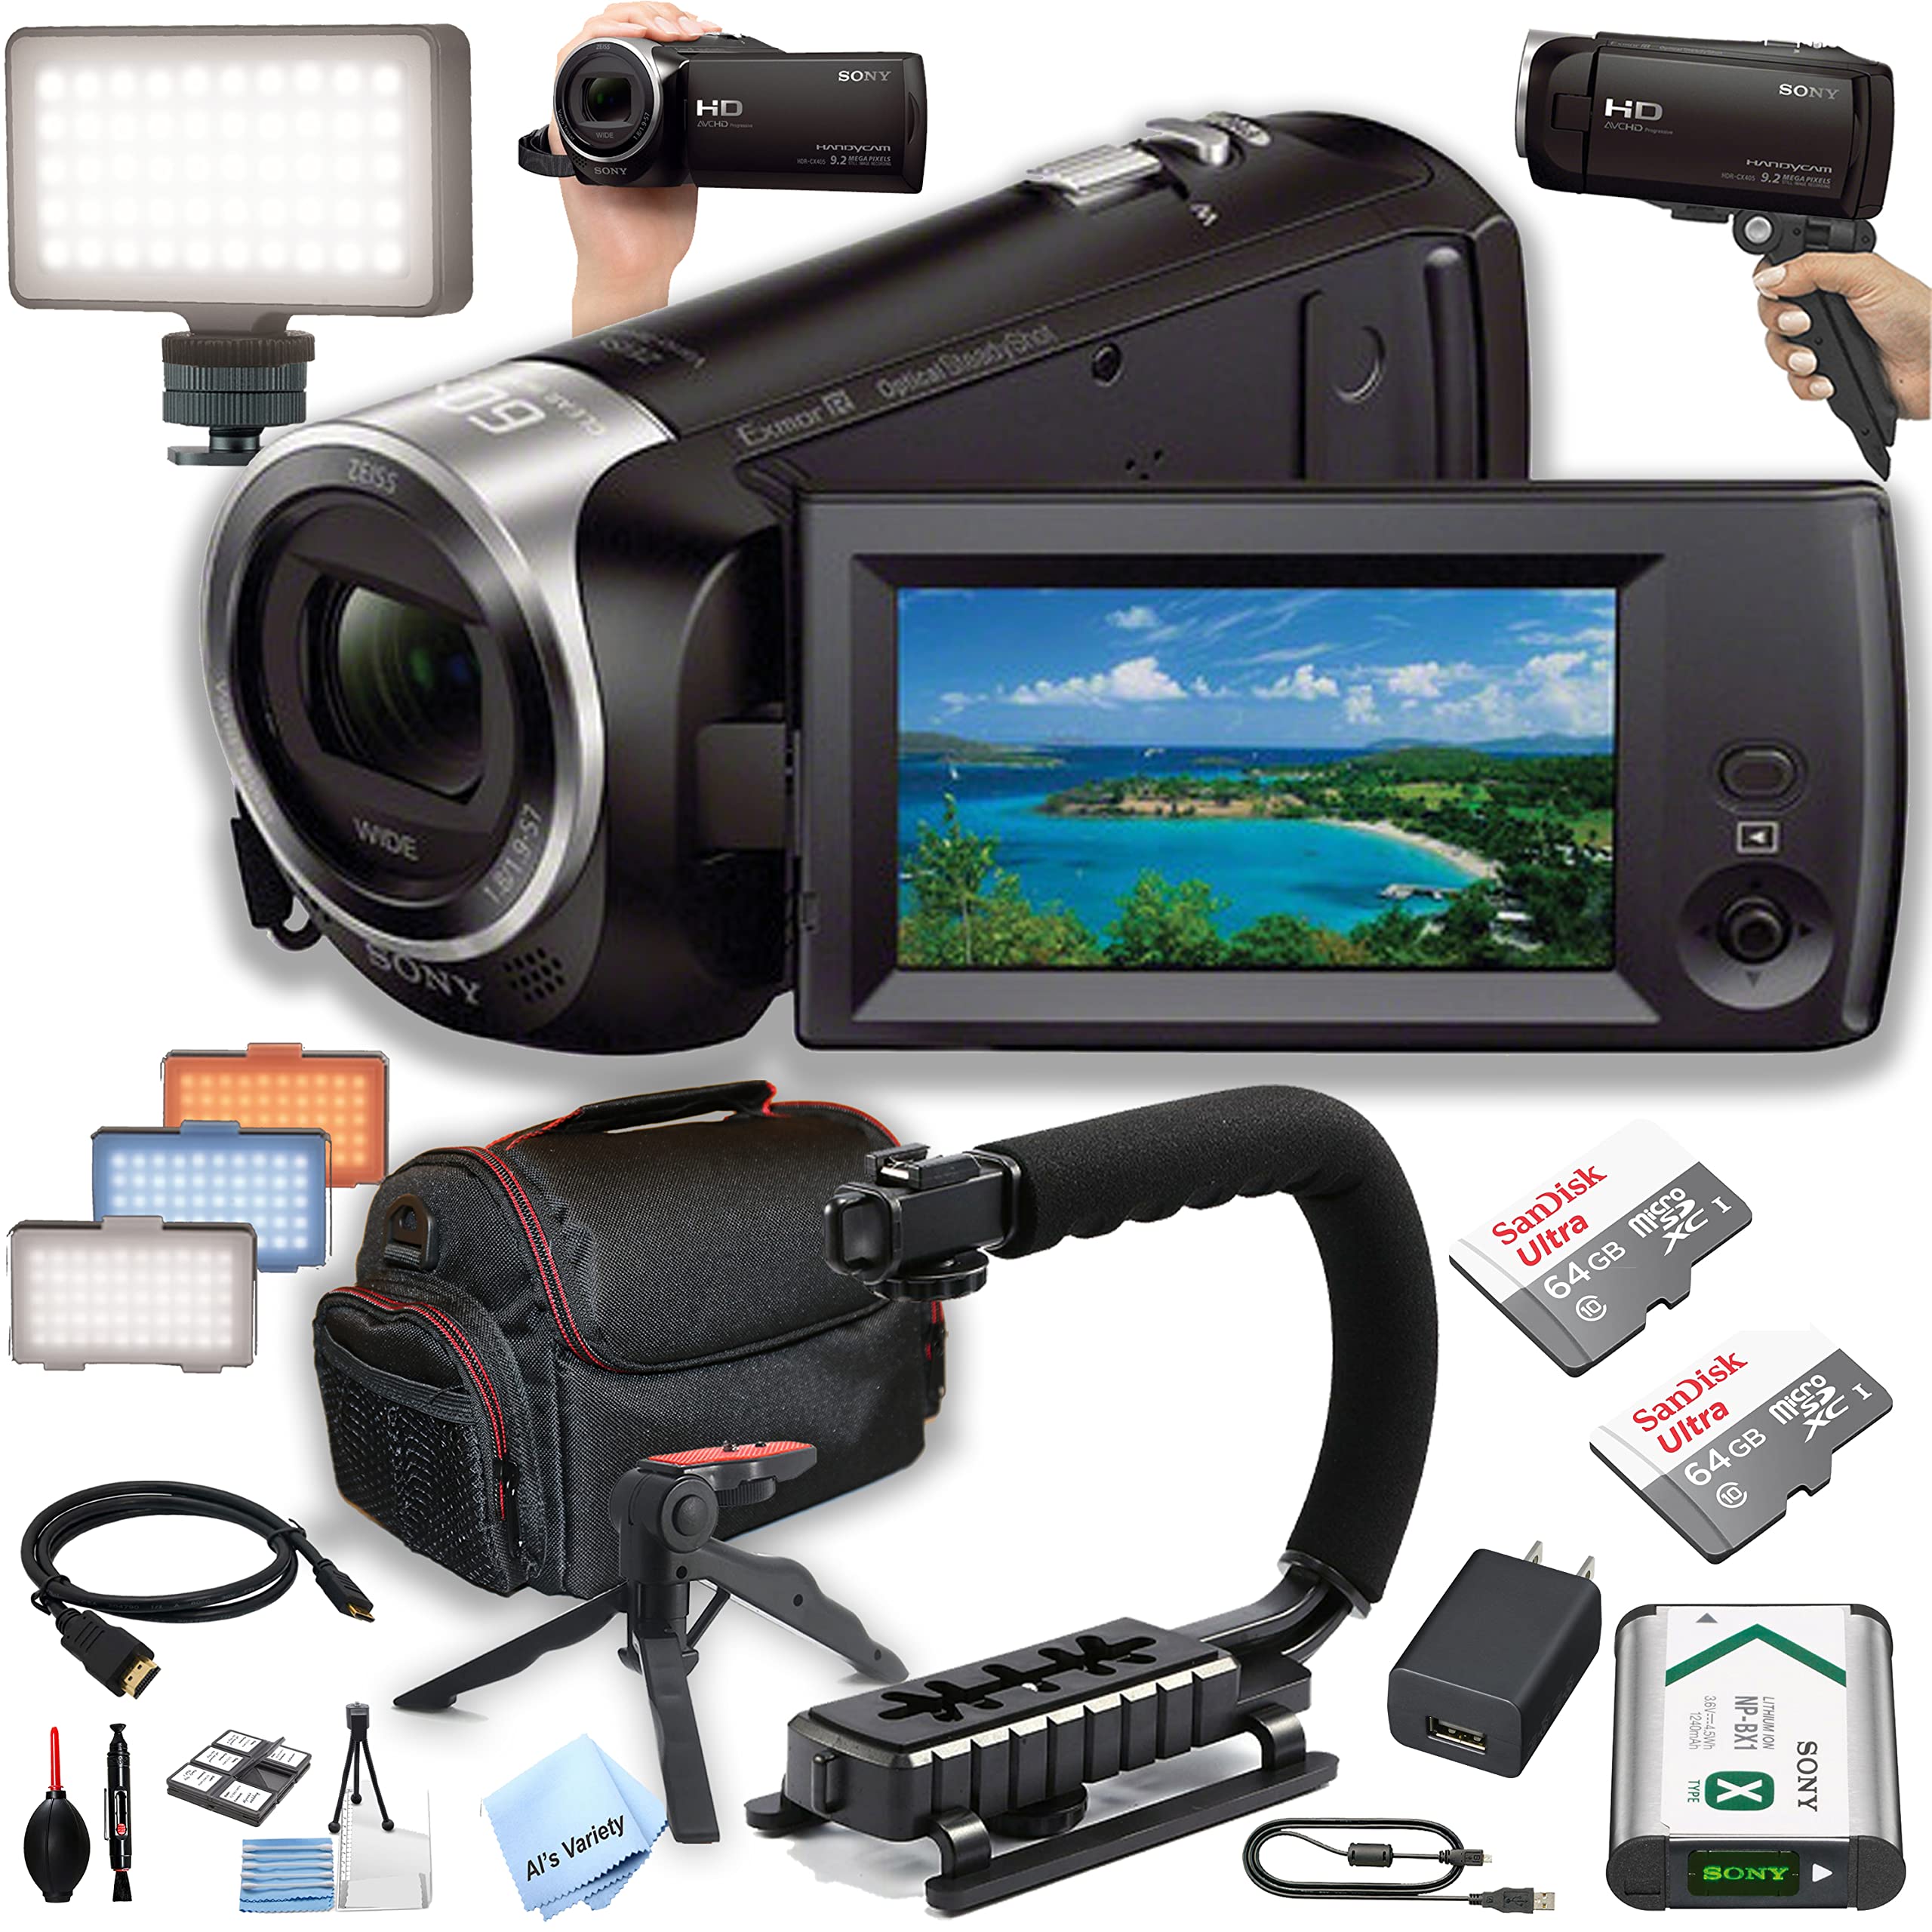 Caméscope Sony HDR-CX405